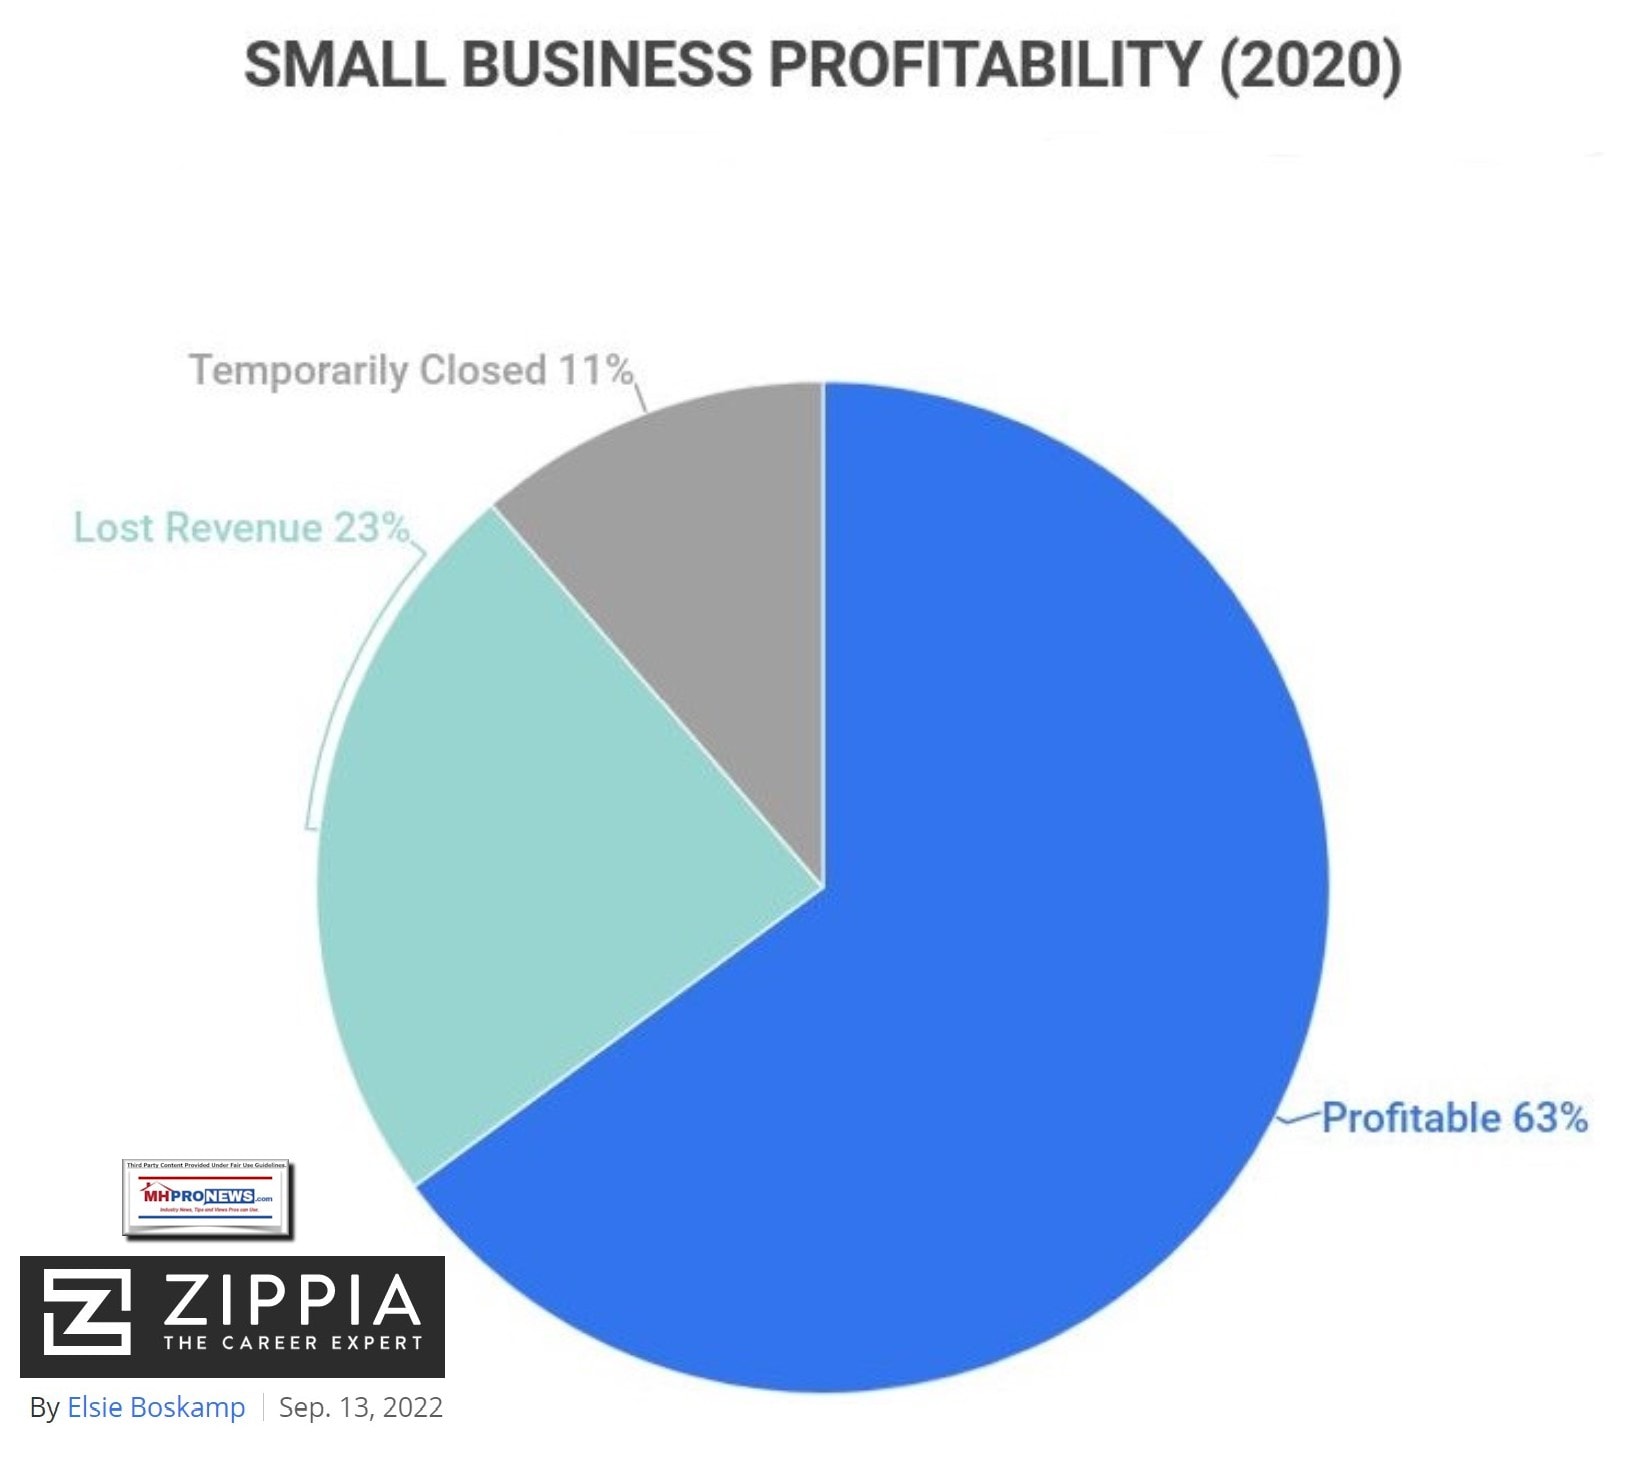 SmallBusinessProfitability2020ZippiaGraphicMHProNews9.13.2022